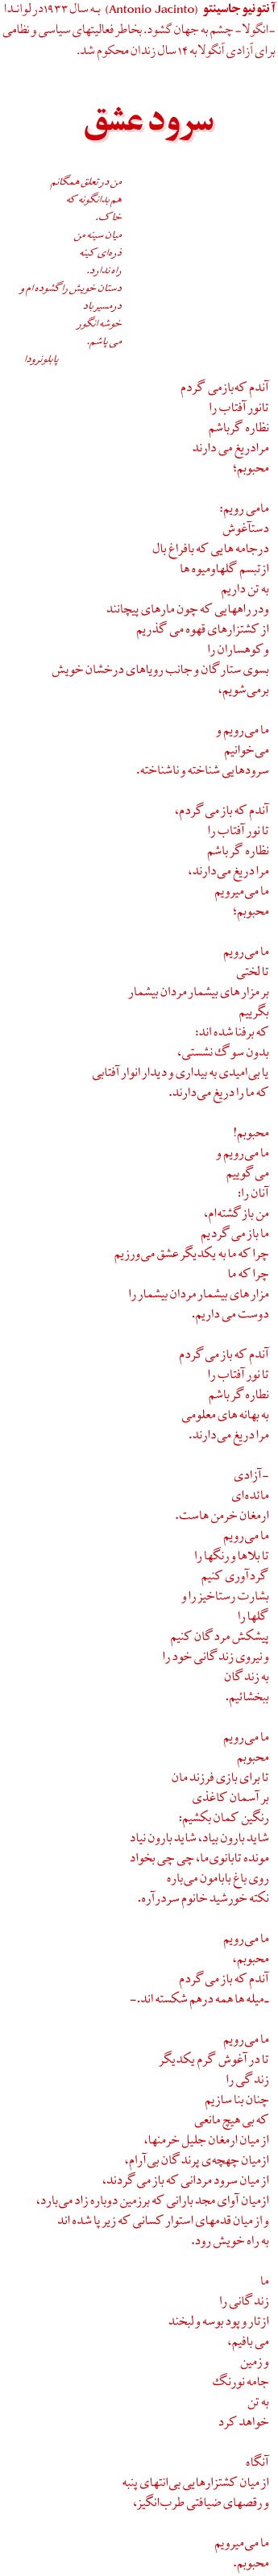 Poems by Antonio Jacinto translated into Persian